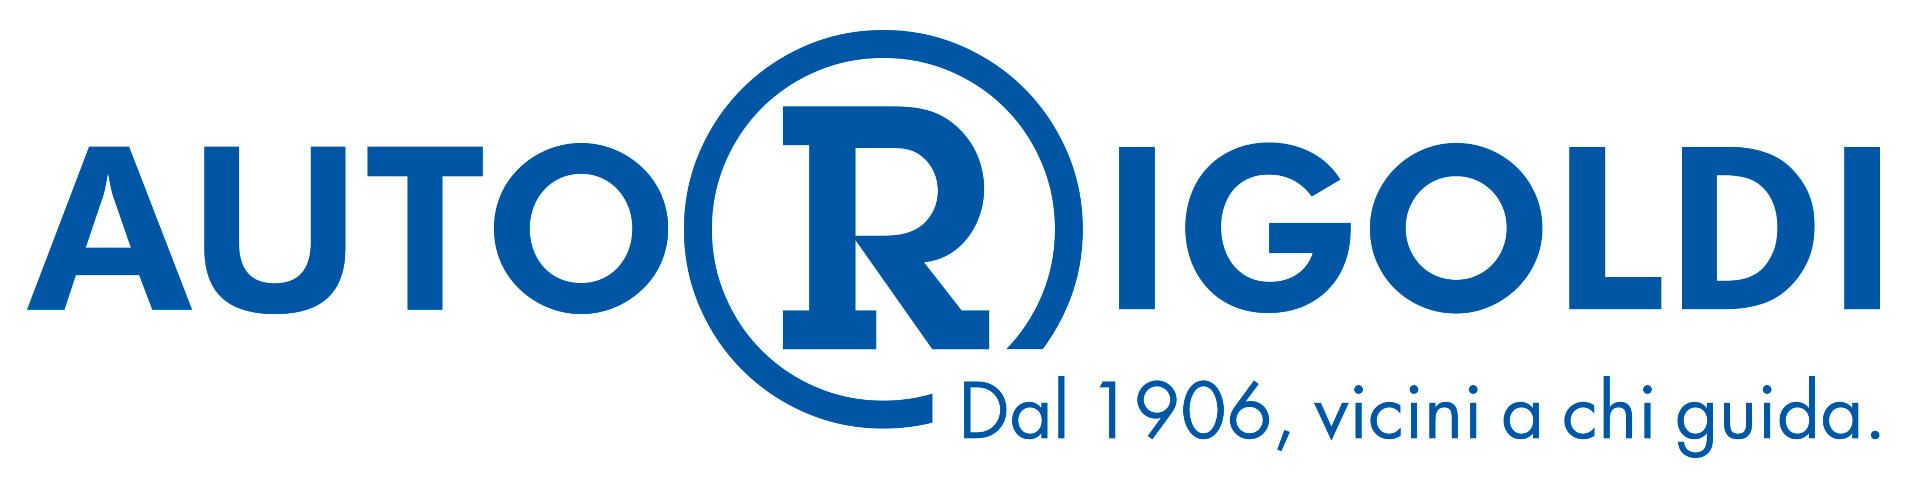 Autorigoldi Logo